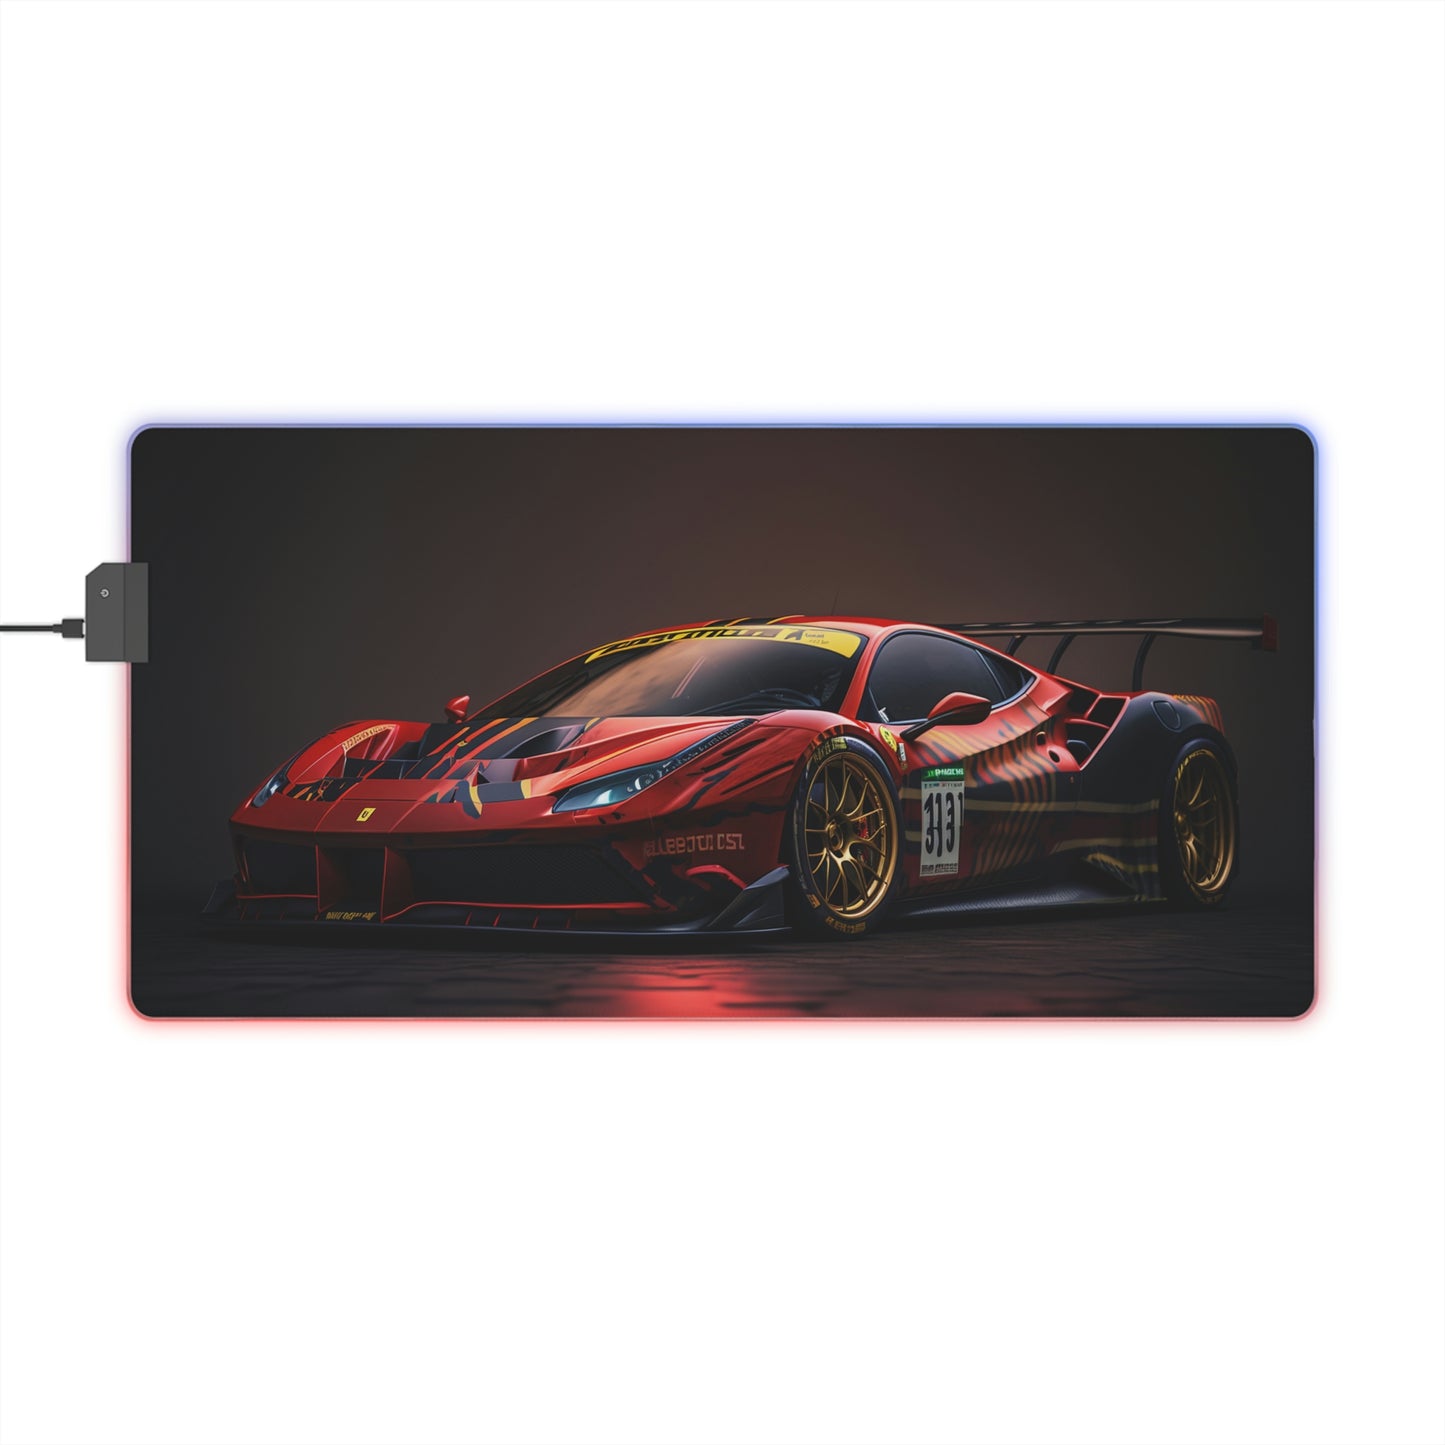 LED Gaming Mouse Pad Ferrari Red 1